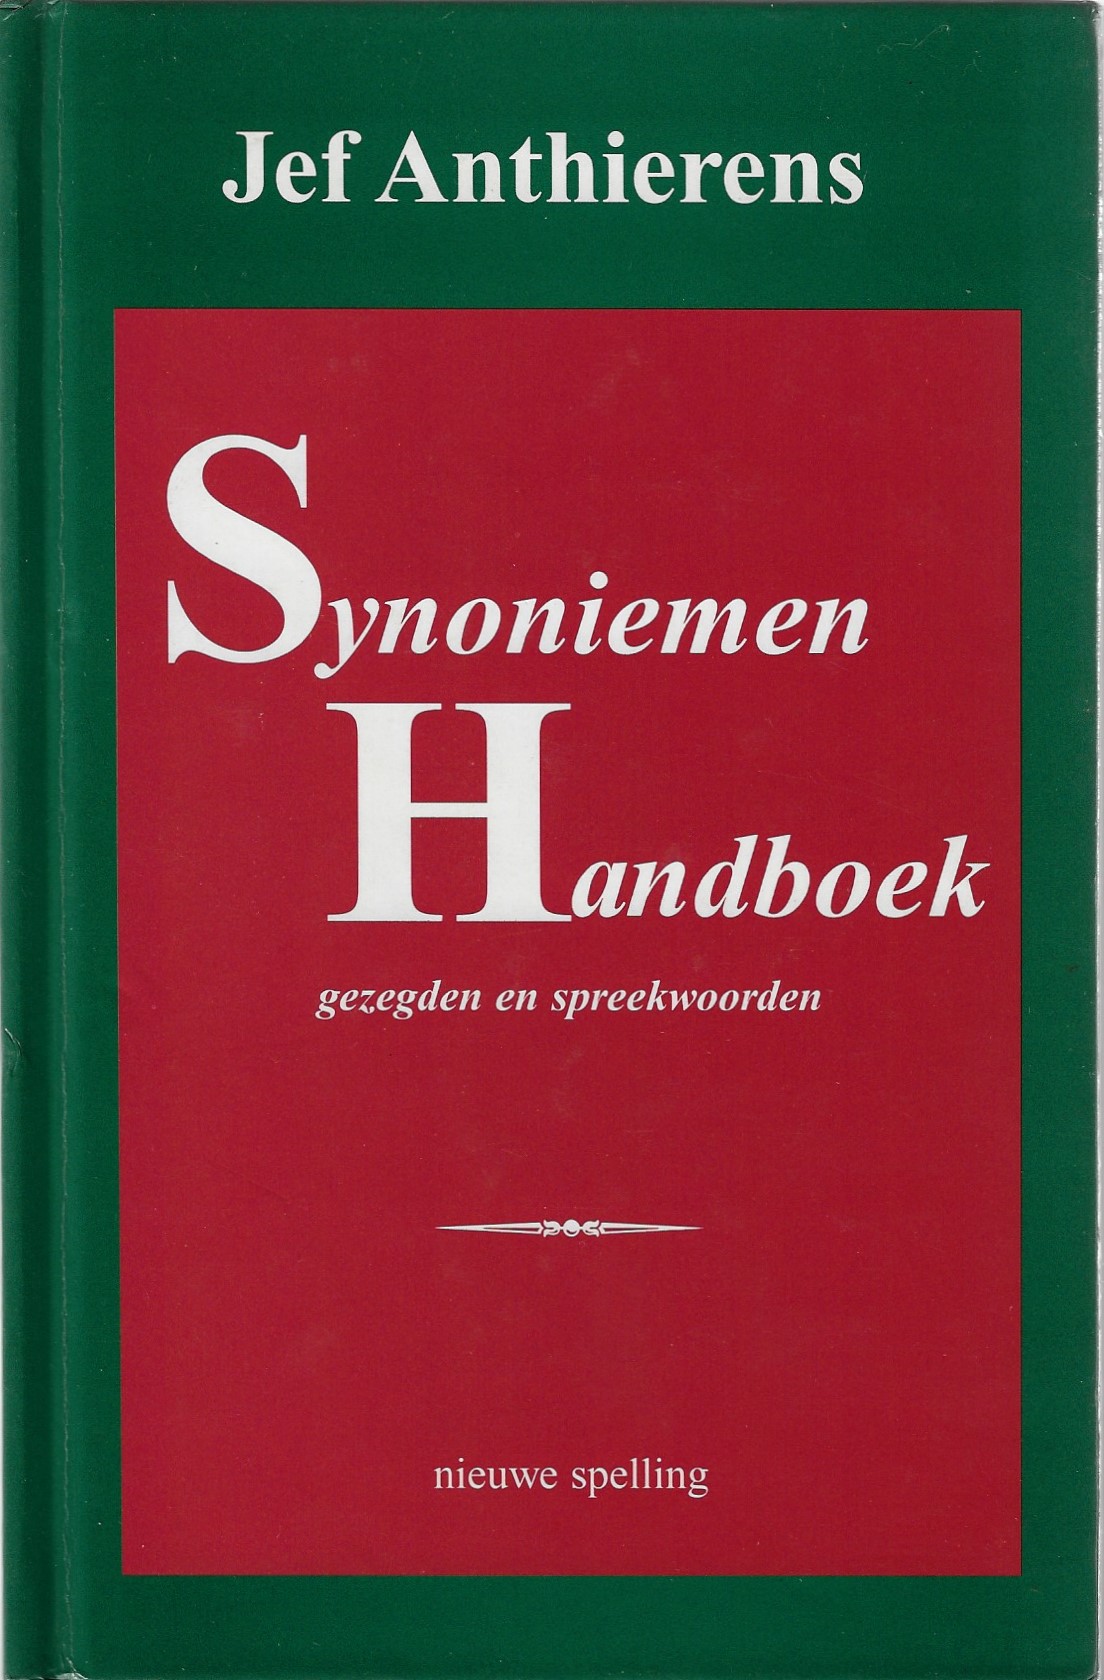 Anthierens, Jef - Synoniemen Handboek